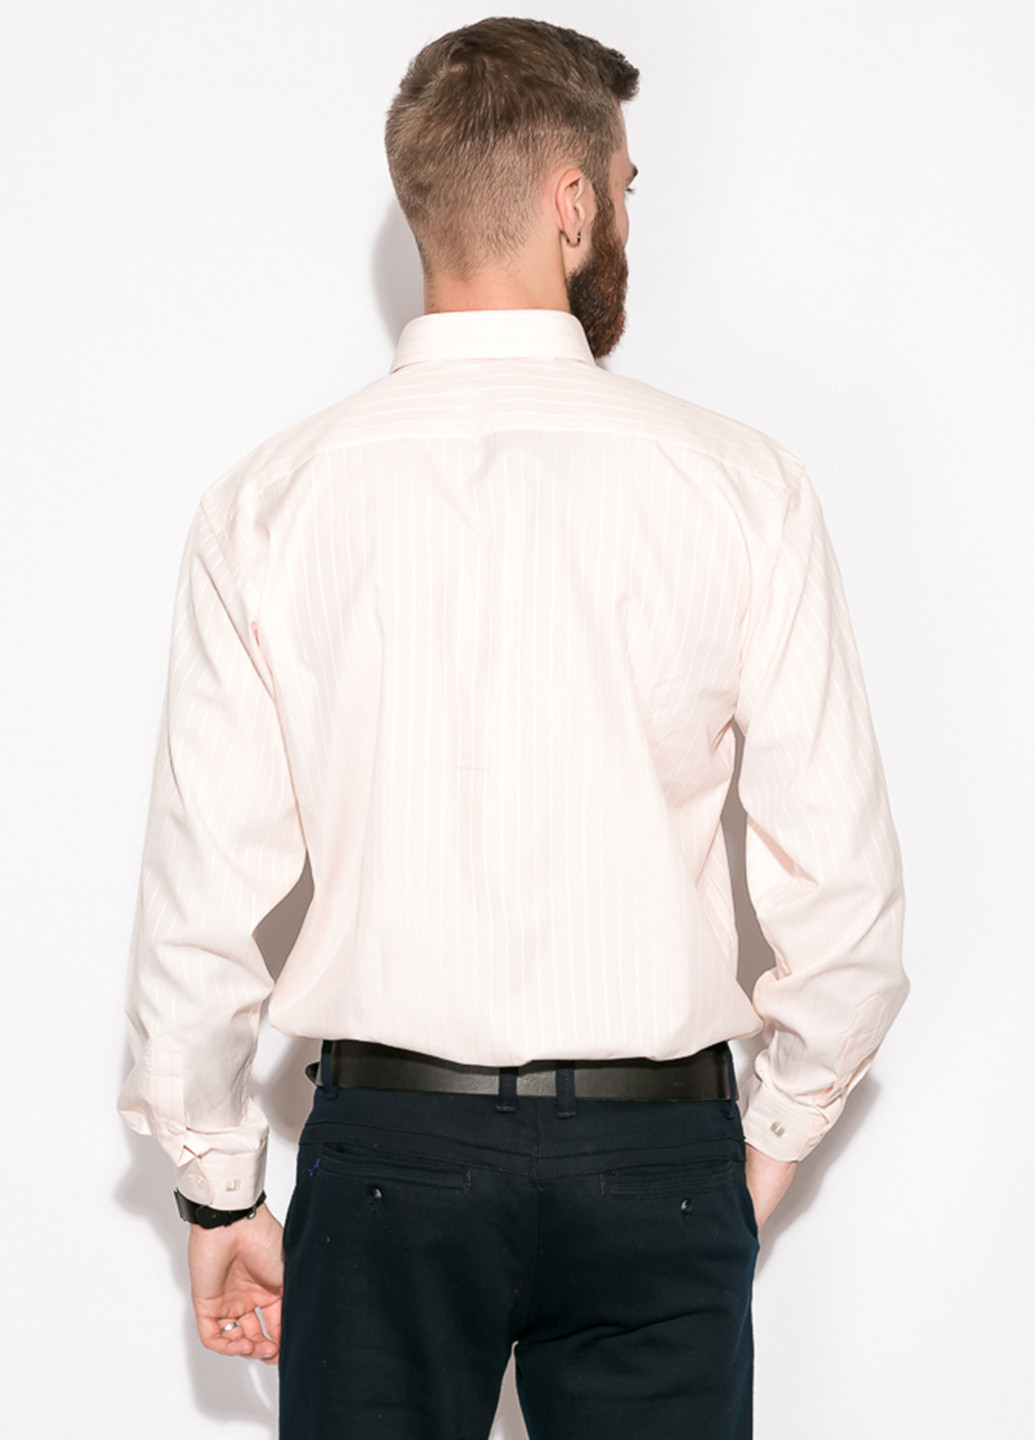 Светло-бежевая кэжуал рубашка однотонная Time of Style с длинным рукавом